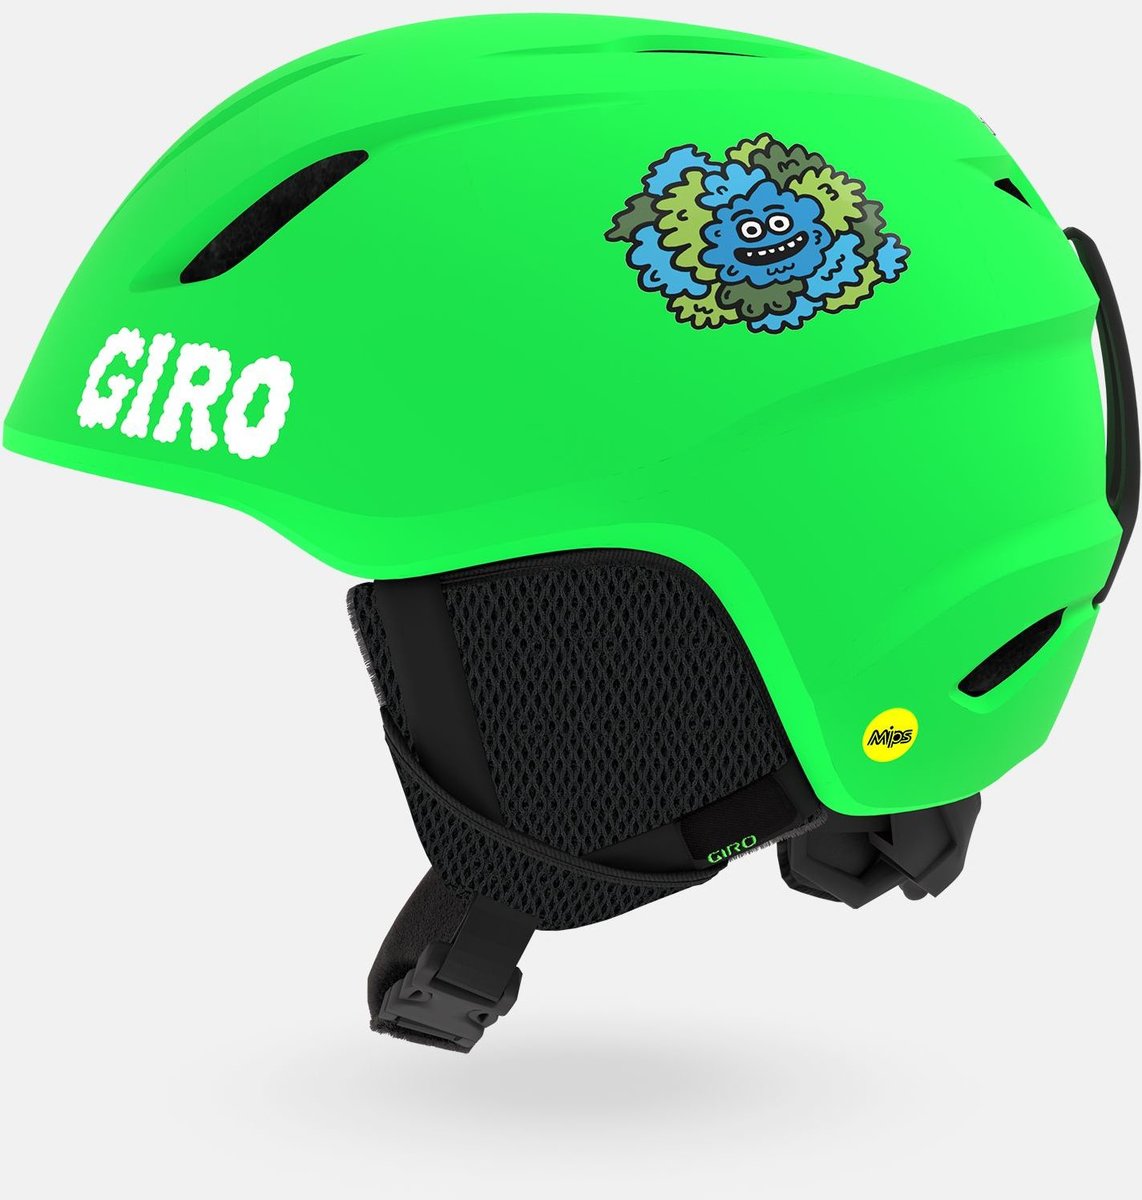  Giro Rev Youth Snow Goggles - Lilnugs Strap with